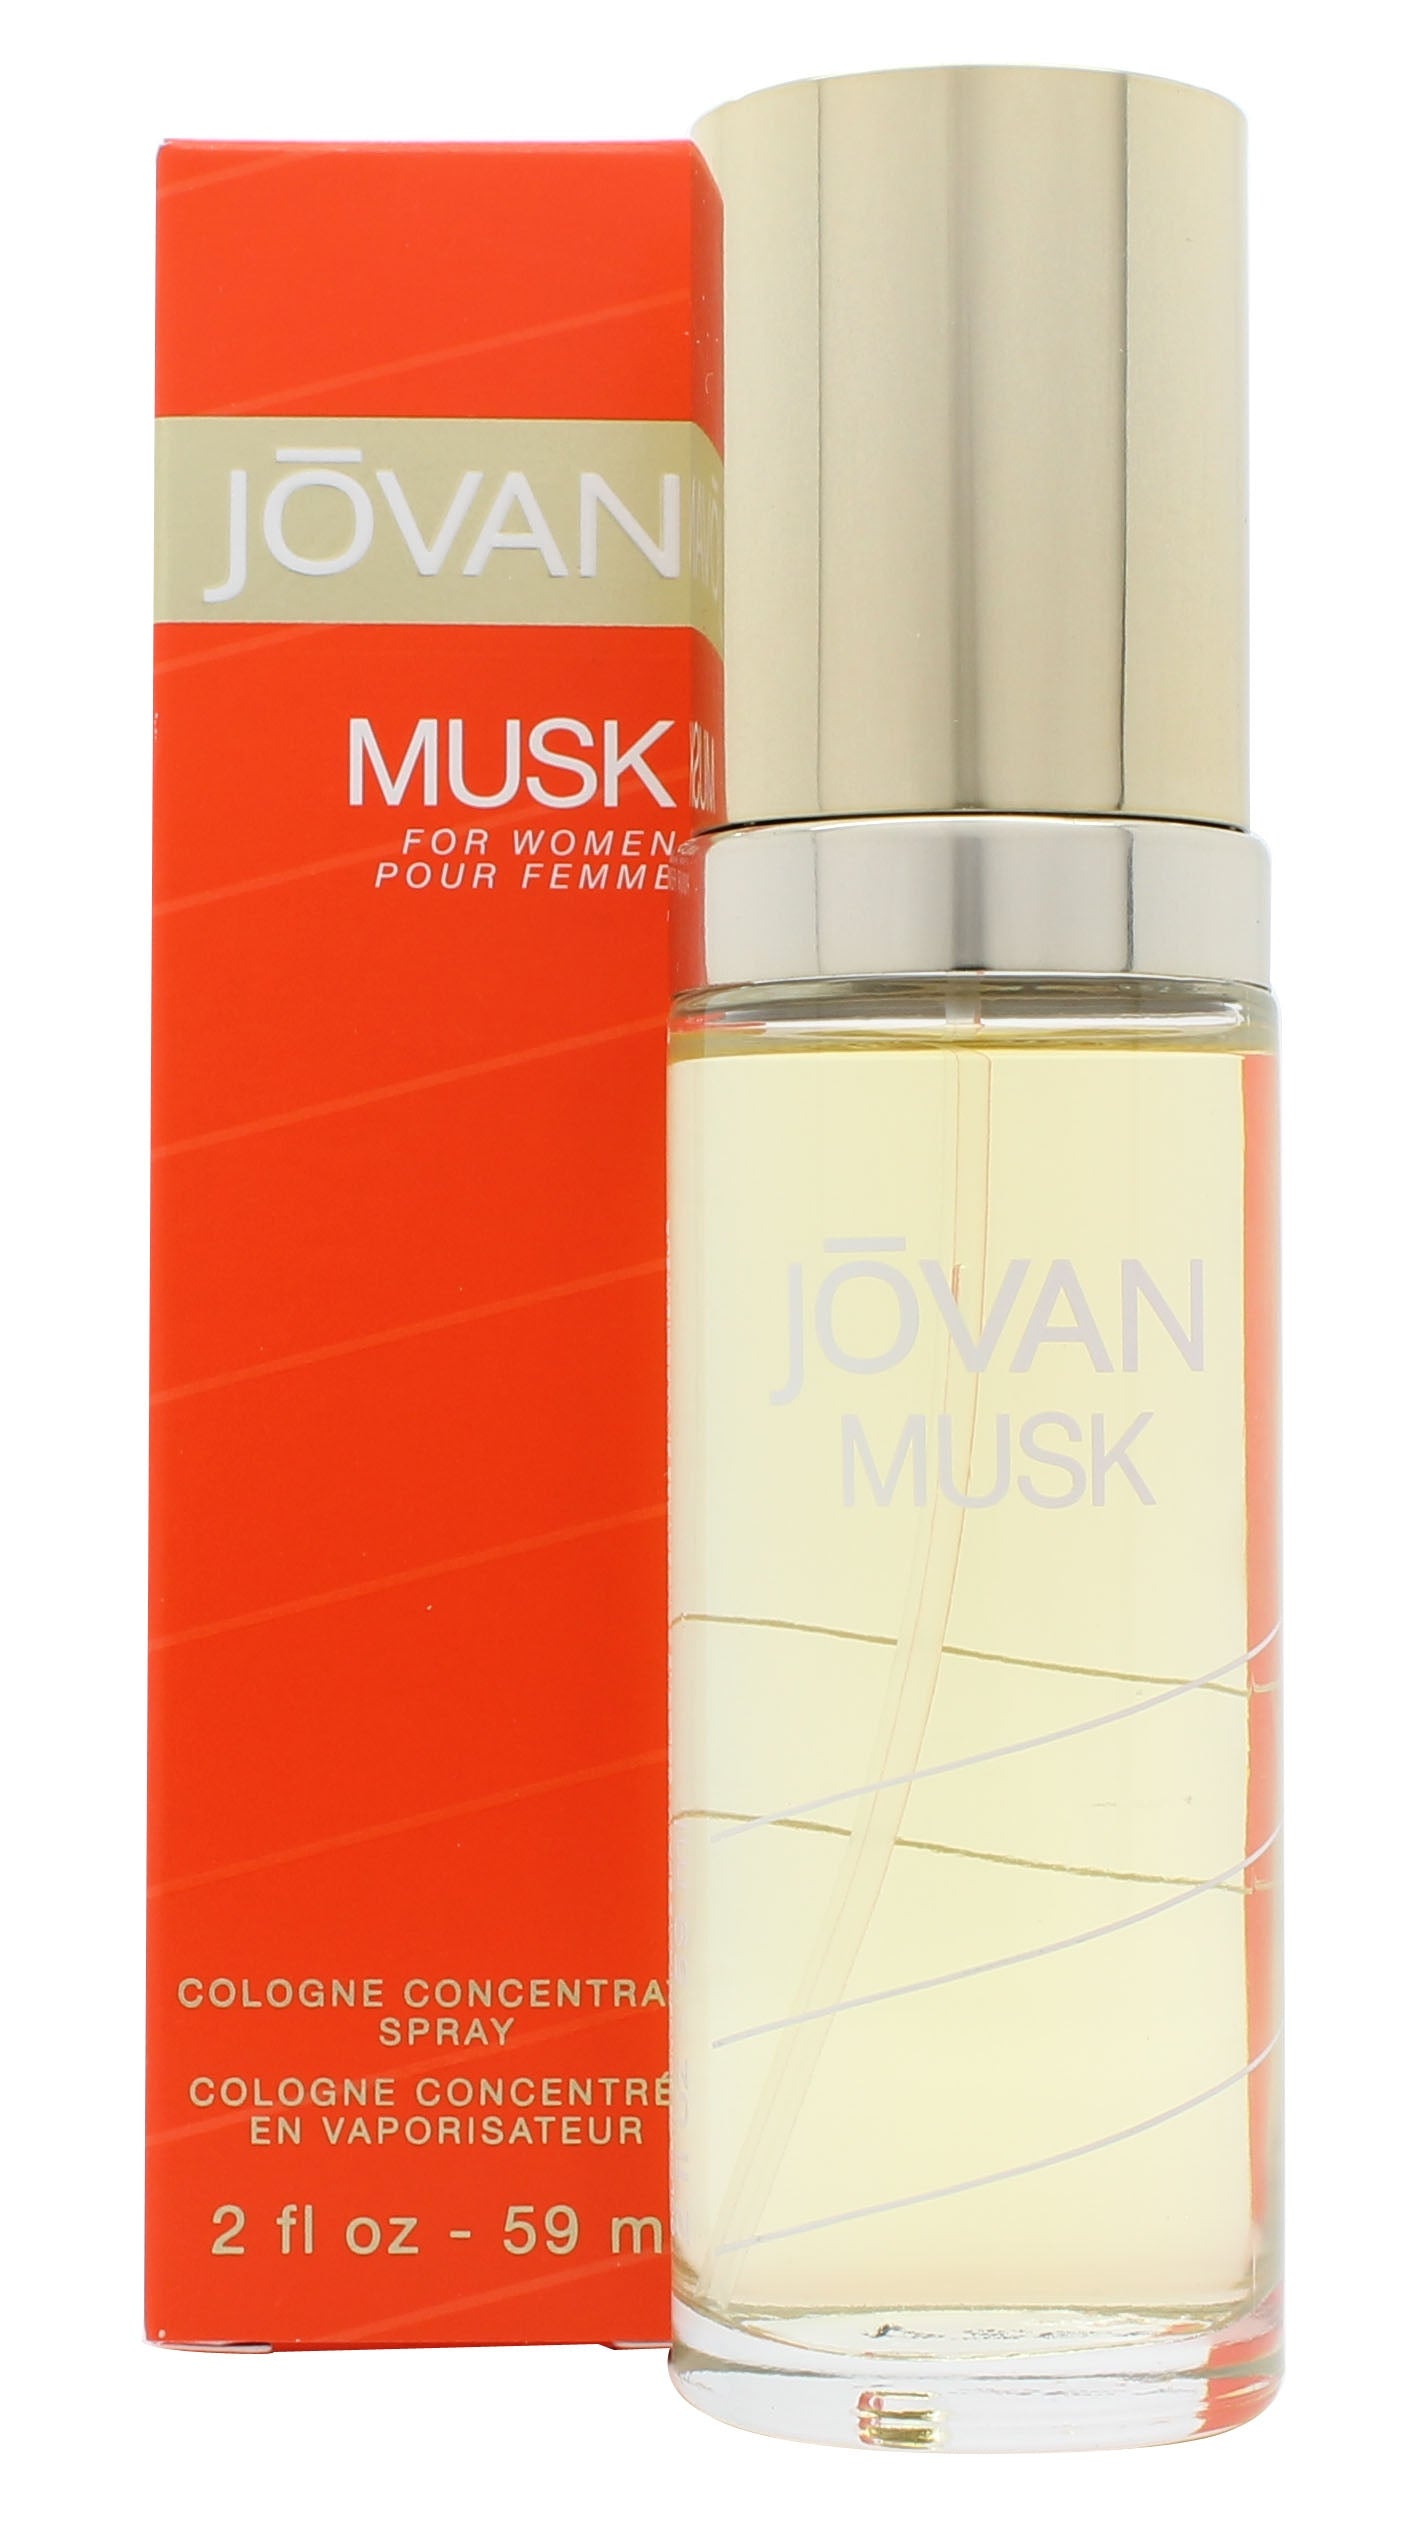 View Jovan Musk for Woman Eau de Cologne 59ml Spray information